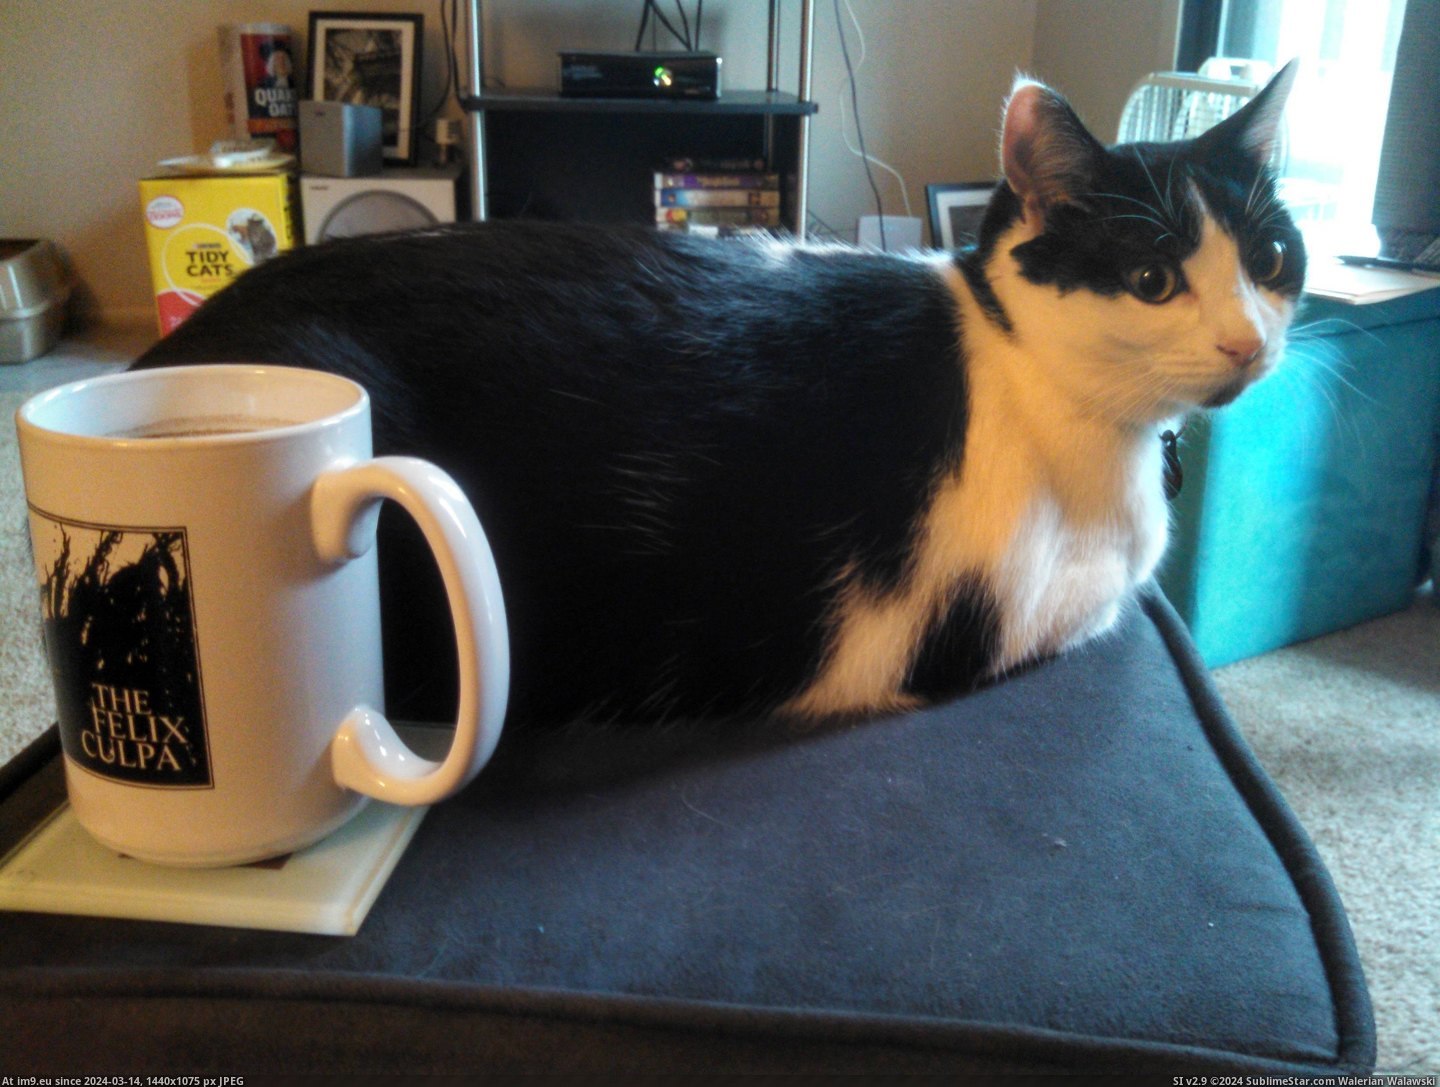 #Cats #Coffee #Buttwarmer #Calls #Zoey [Cats] I call it coffee, Zoey calls it a buttwarmer. Pic. (Bild von album My r/CATS favs))